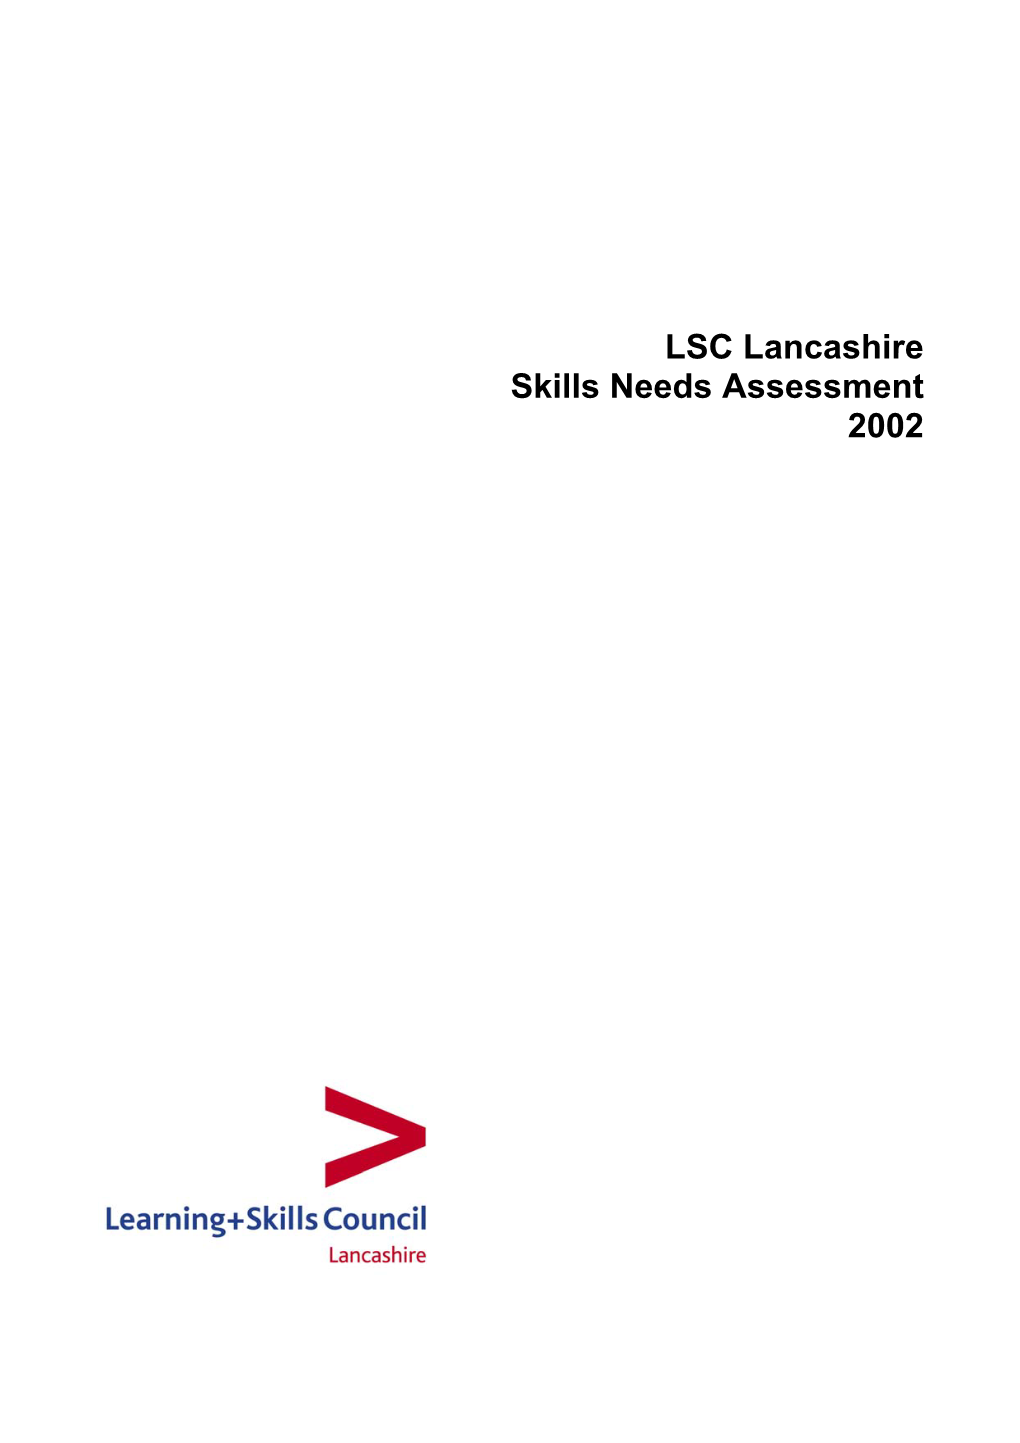 Skills Needs Assessment 2002: Lancashire